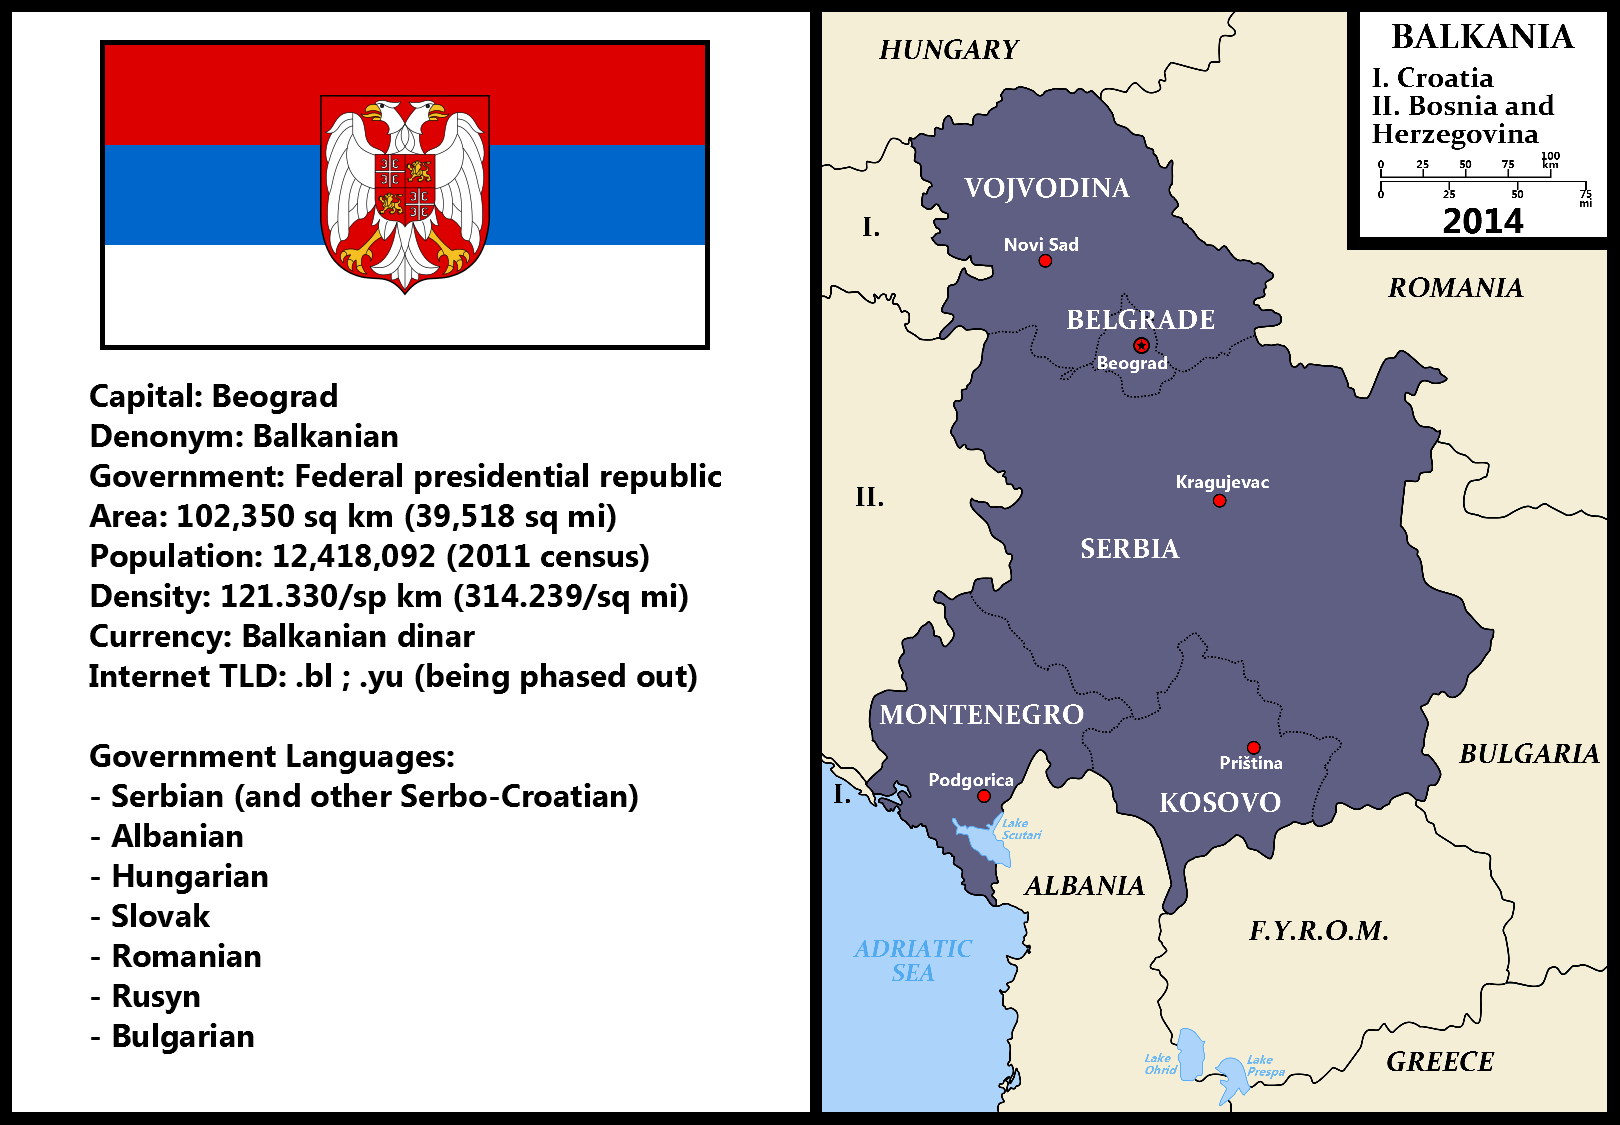 profile_of_balkania_2014_by_federalrepublic-d9bbsdz.png